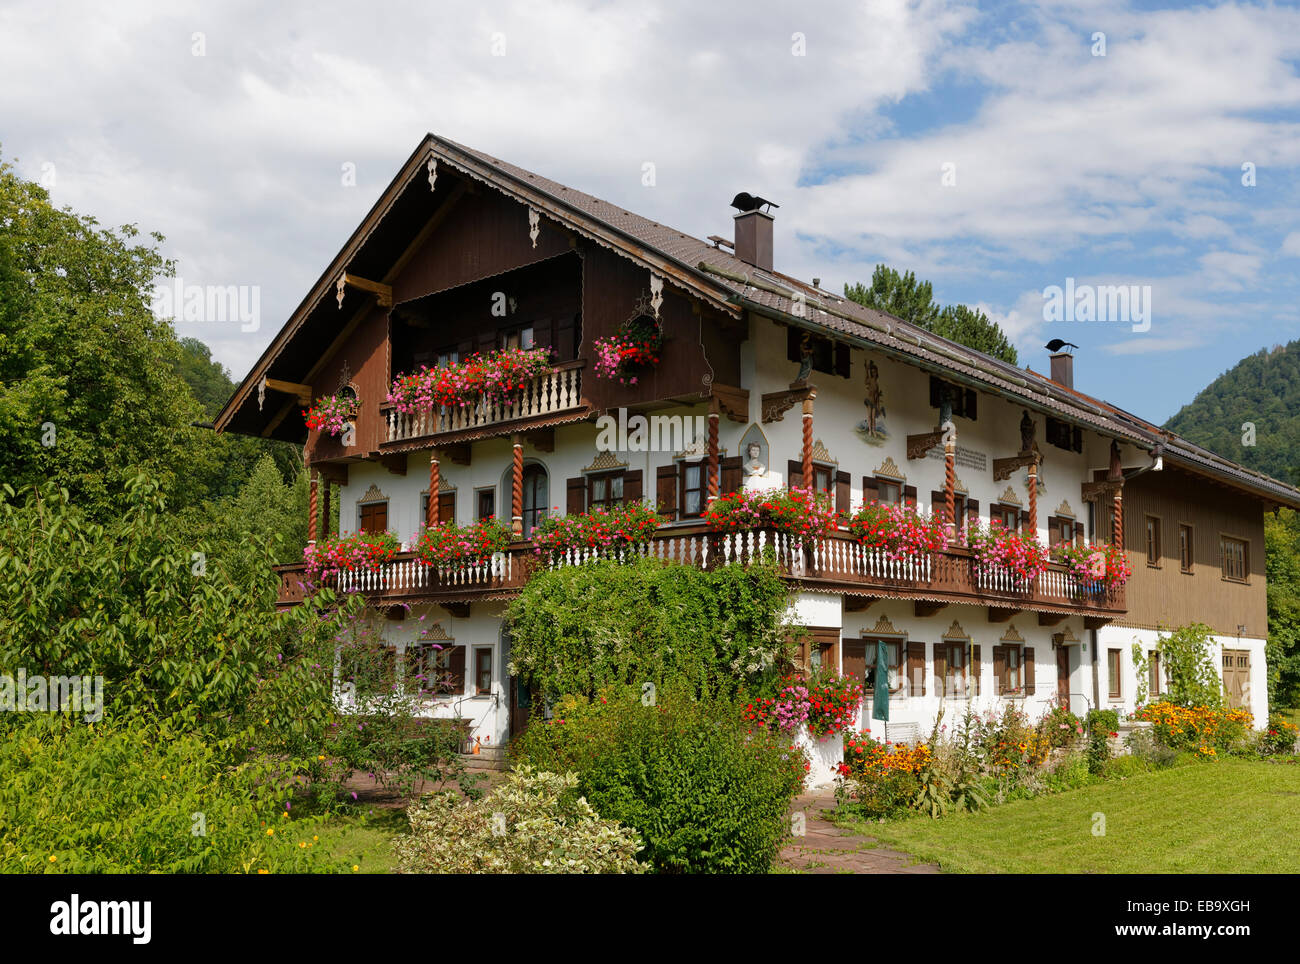 Farmhouse, Nußdorf am Inn, Chiemgau, Upper Bavaria, Bavaria, Germany Stock Photo